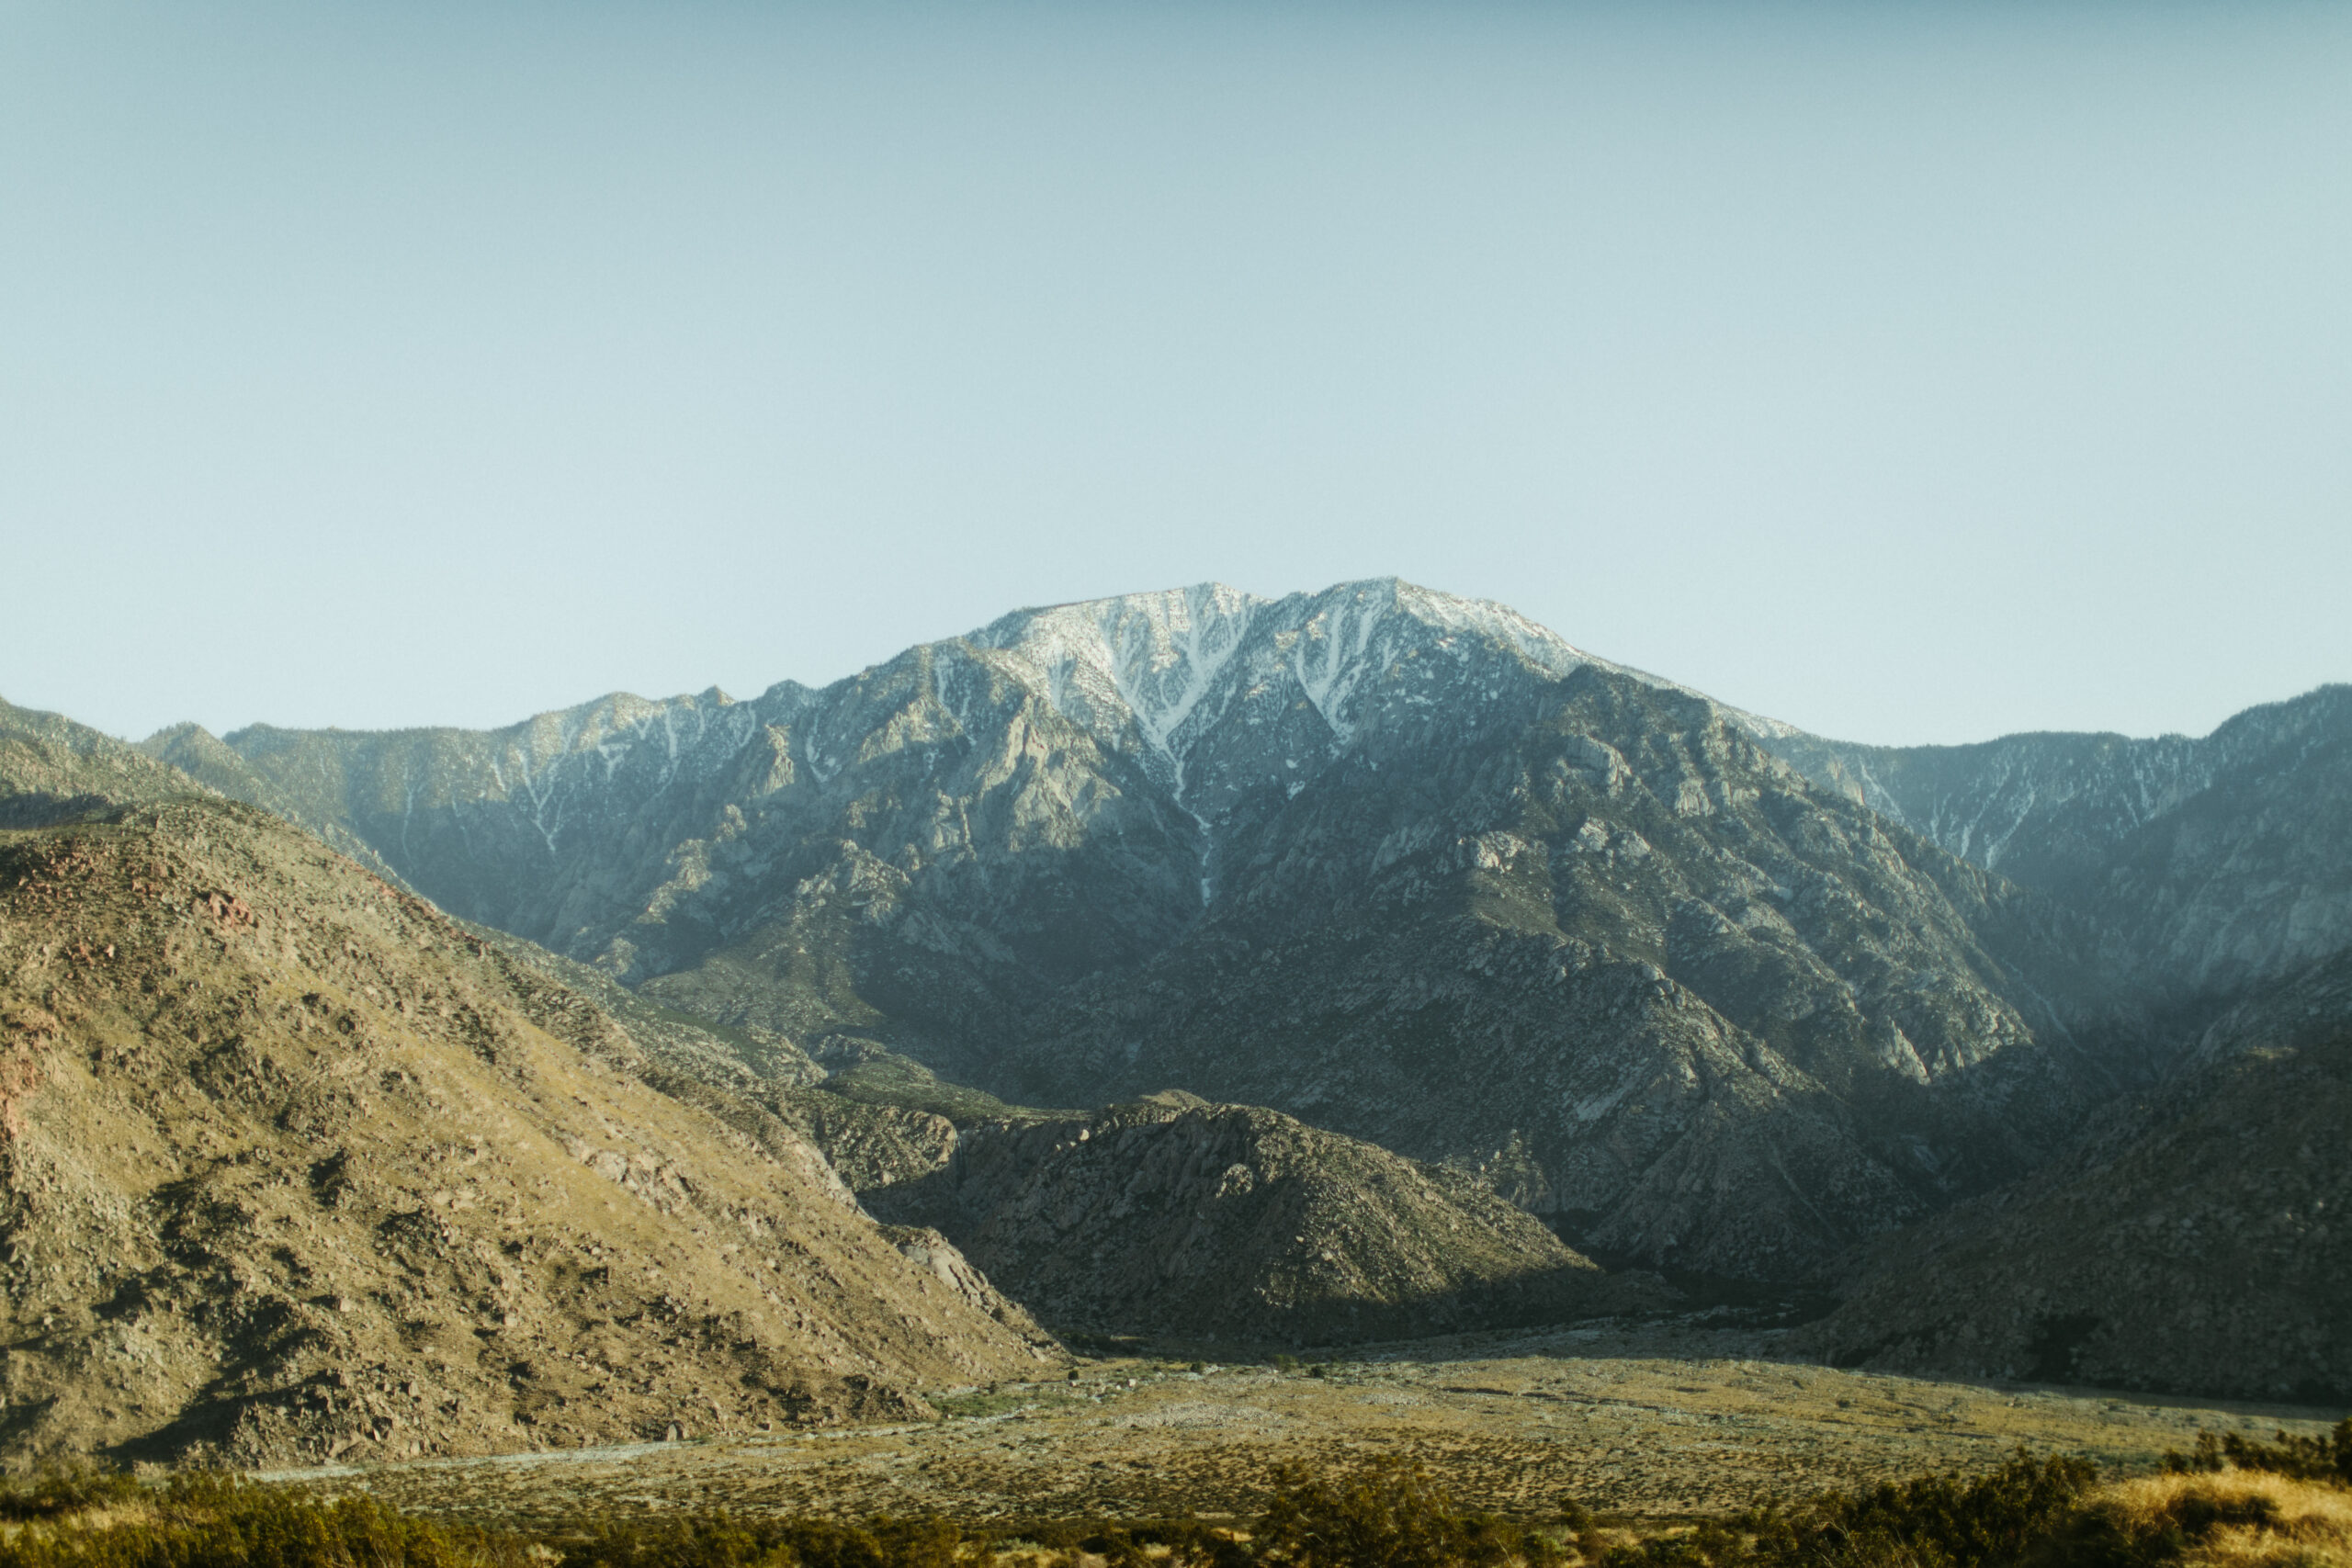 stunning mountain photo from California 